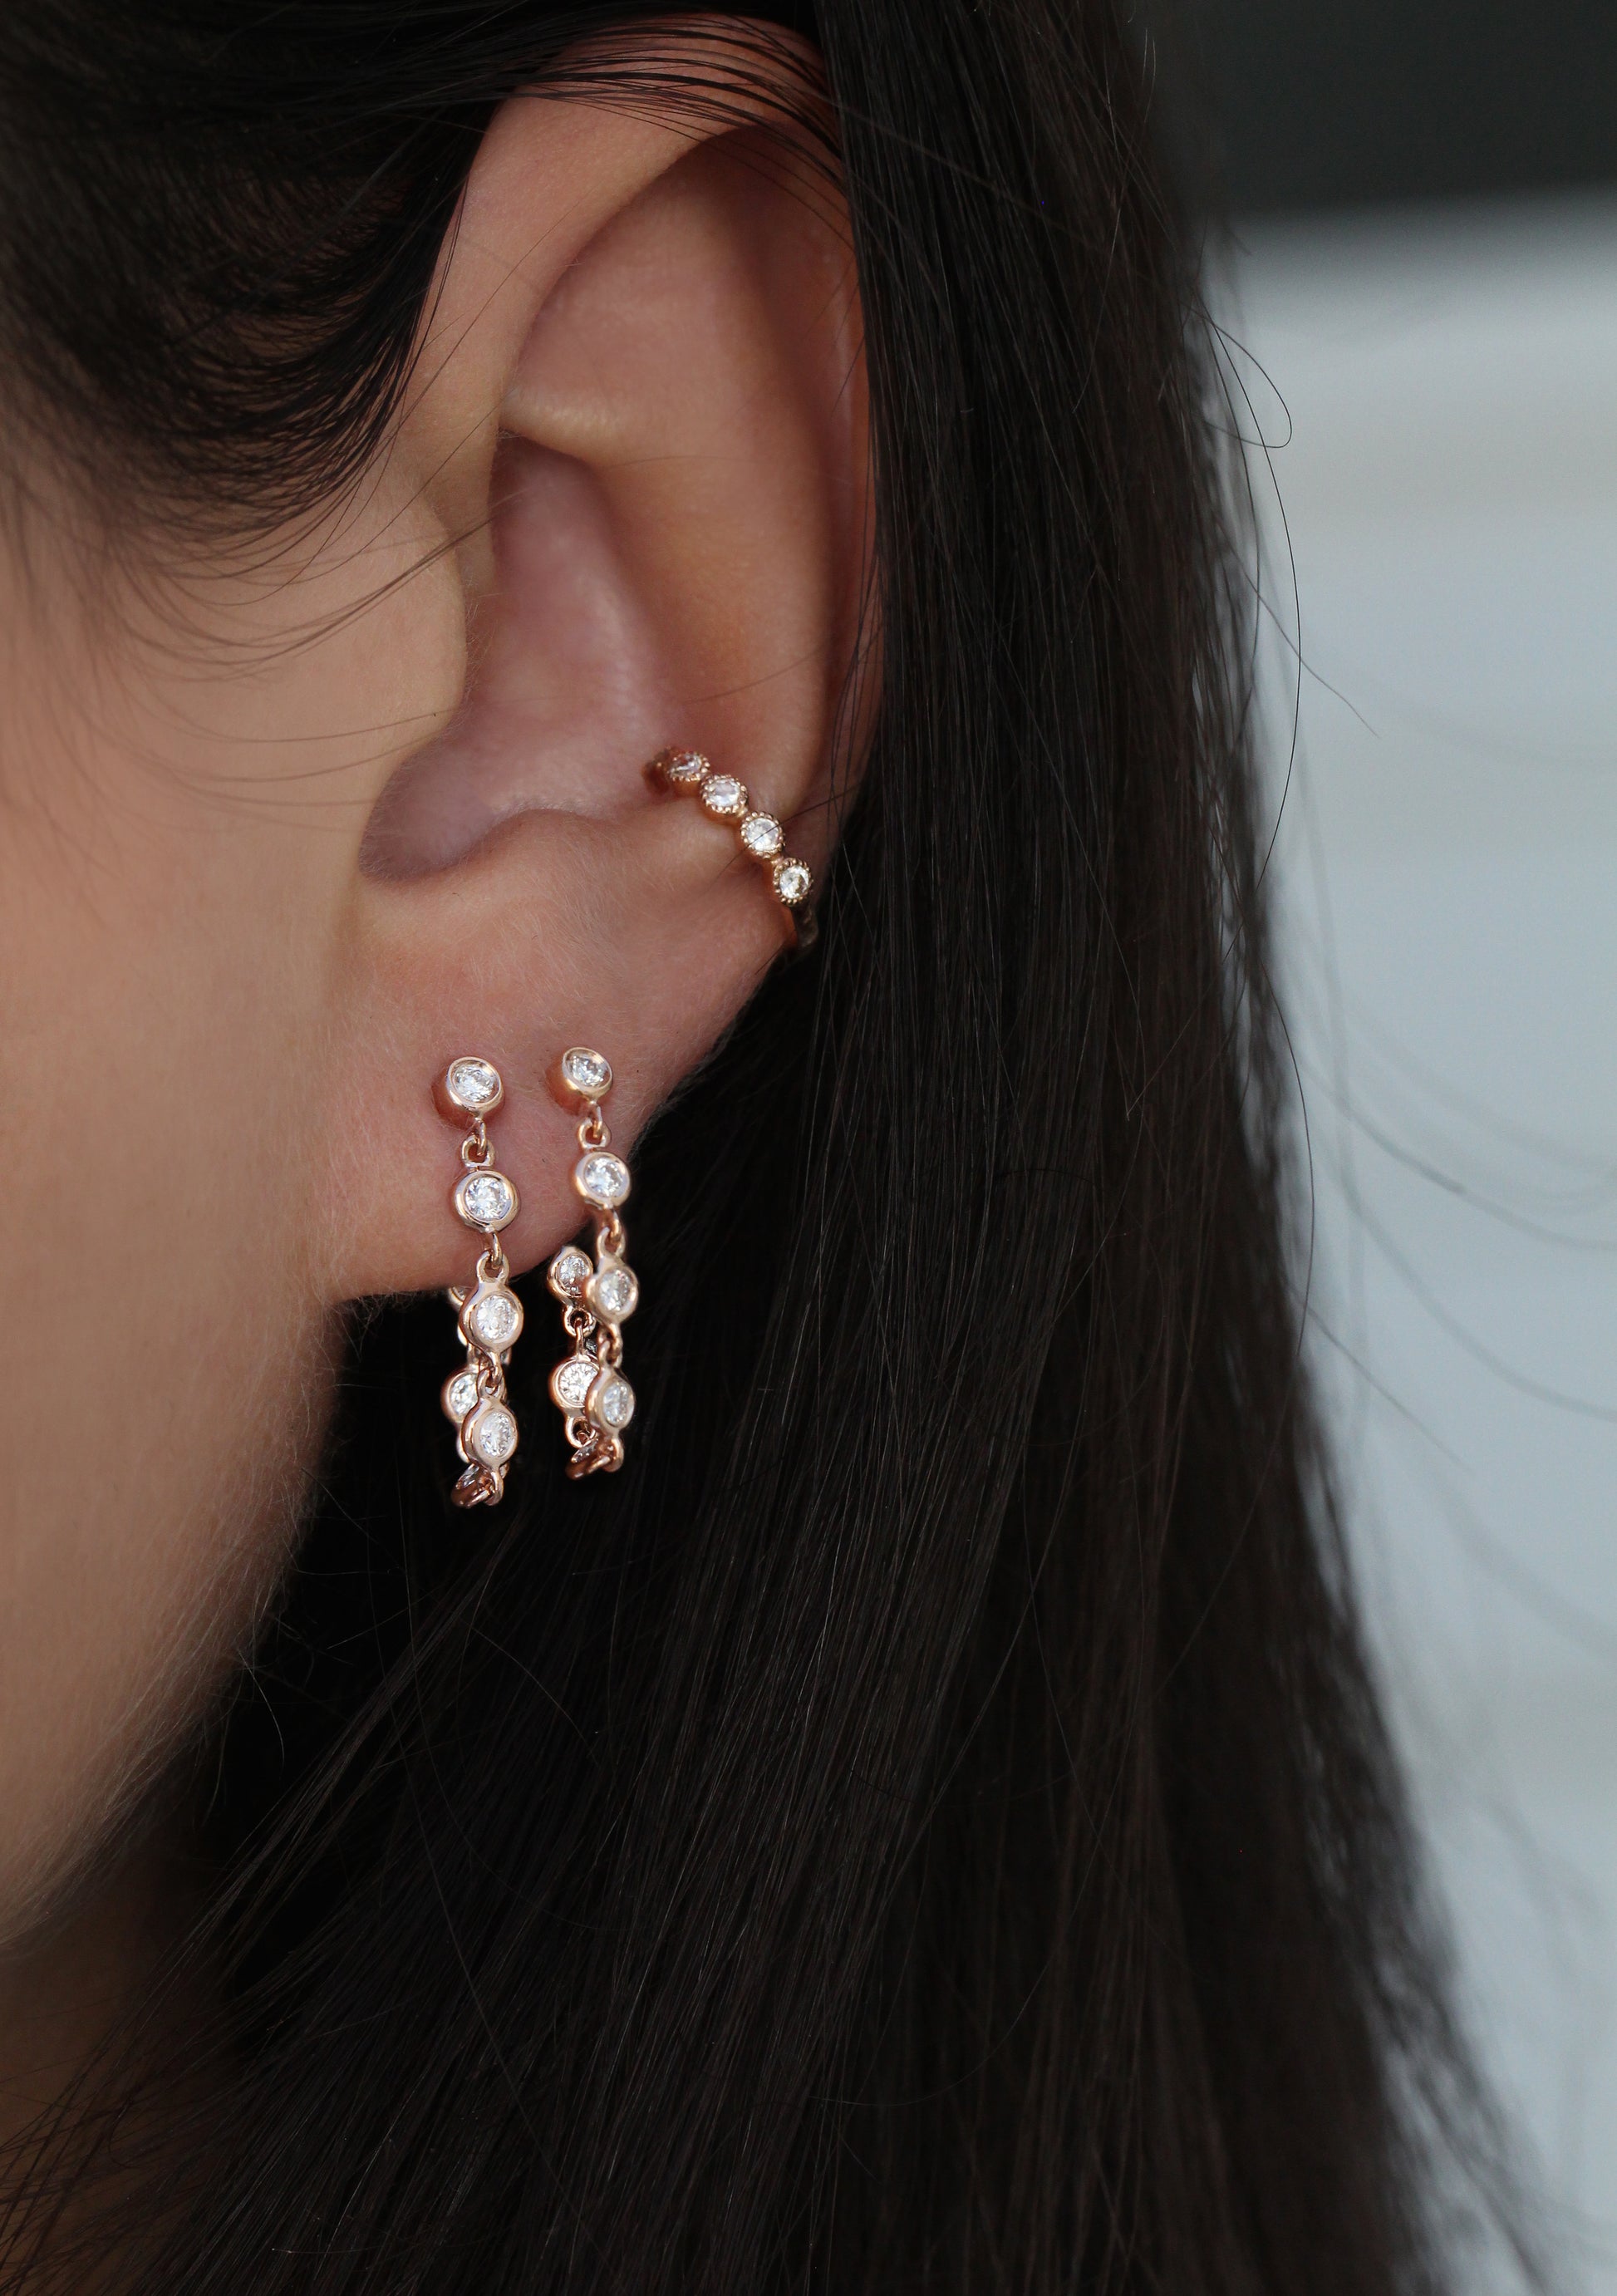 14kt gold and diamond bezel chain earring - Luna Skye